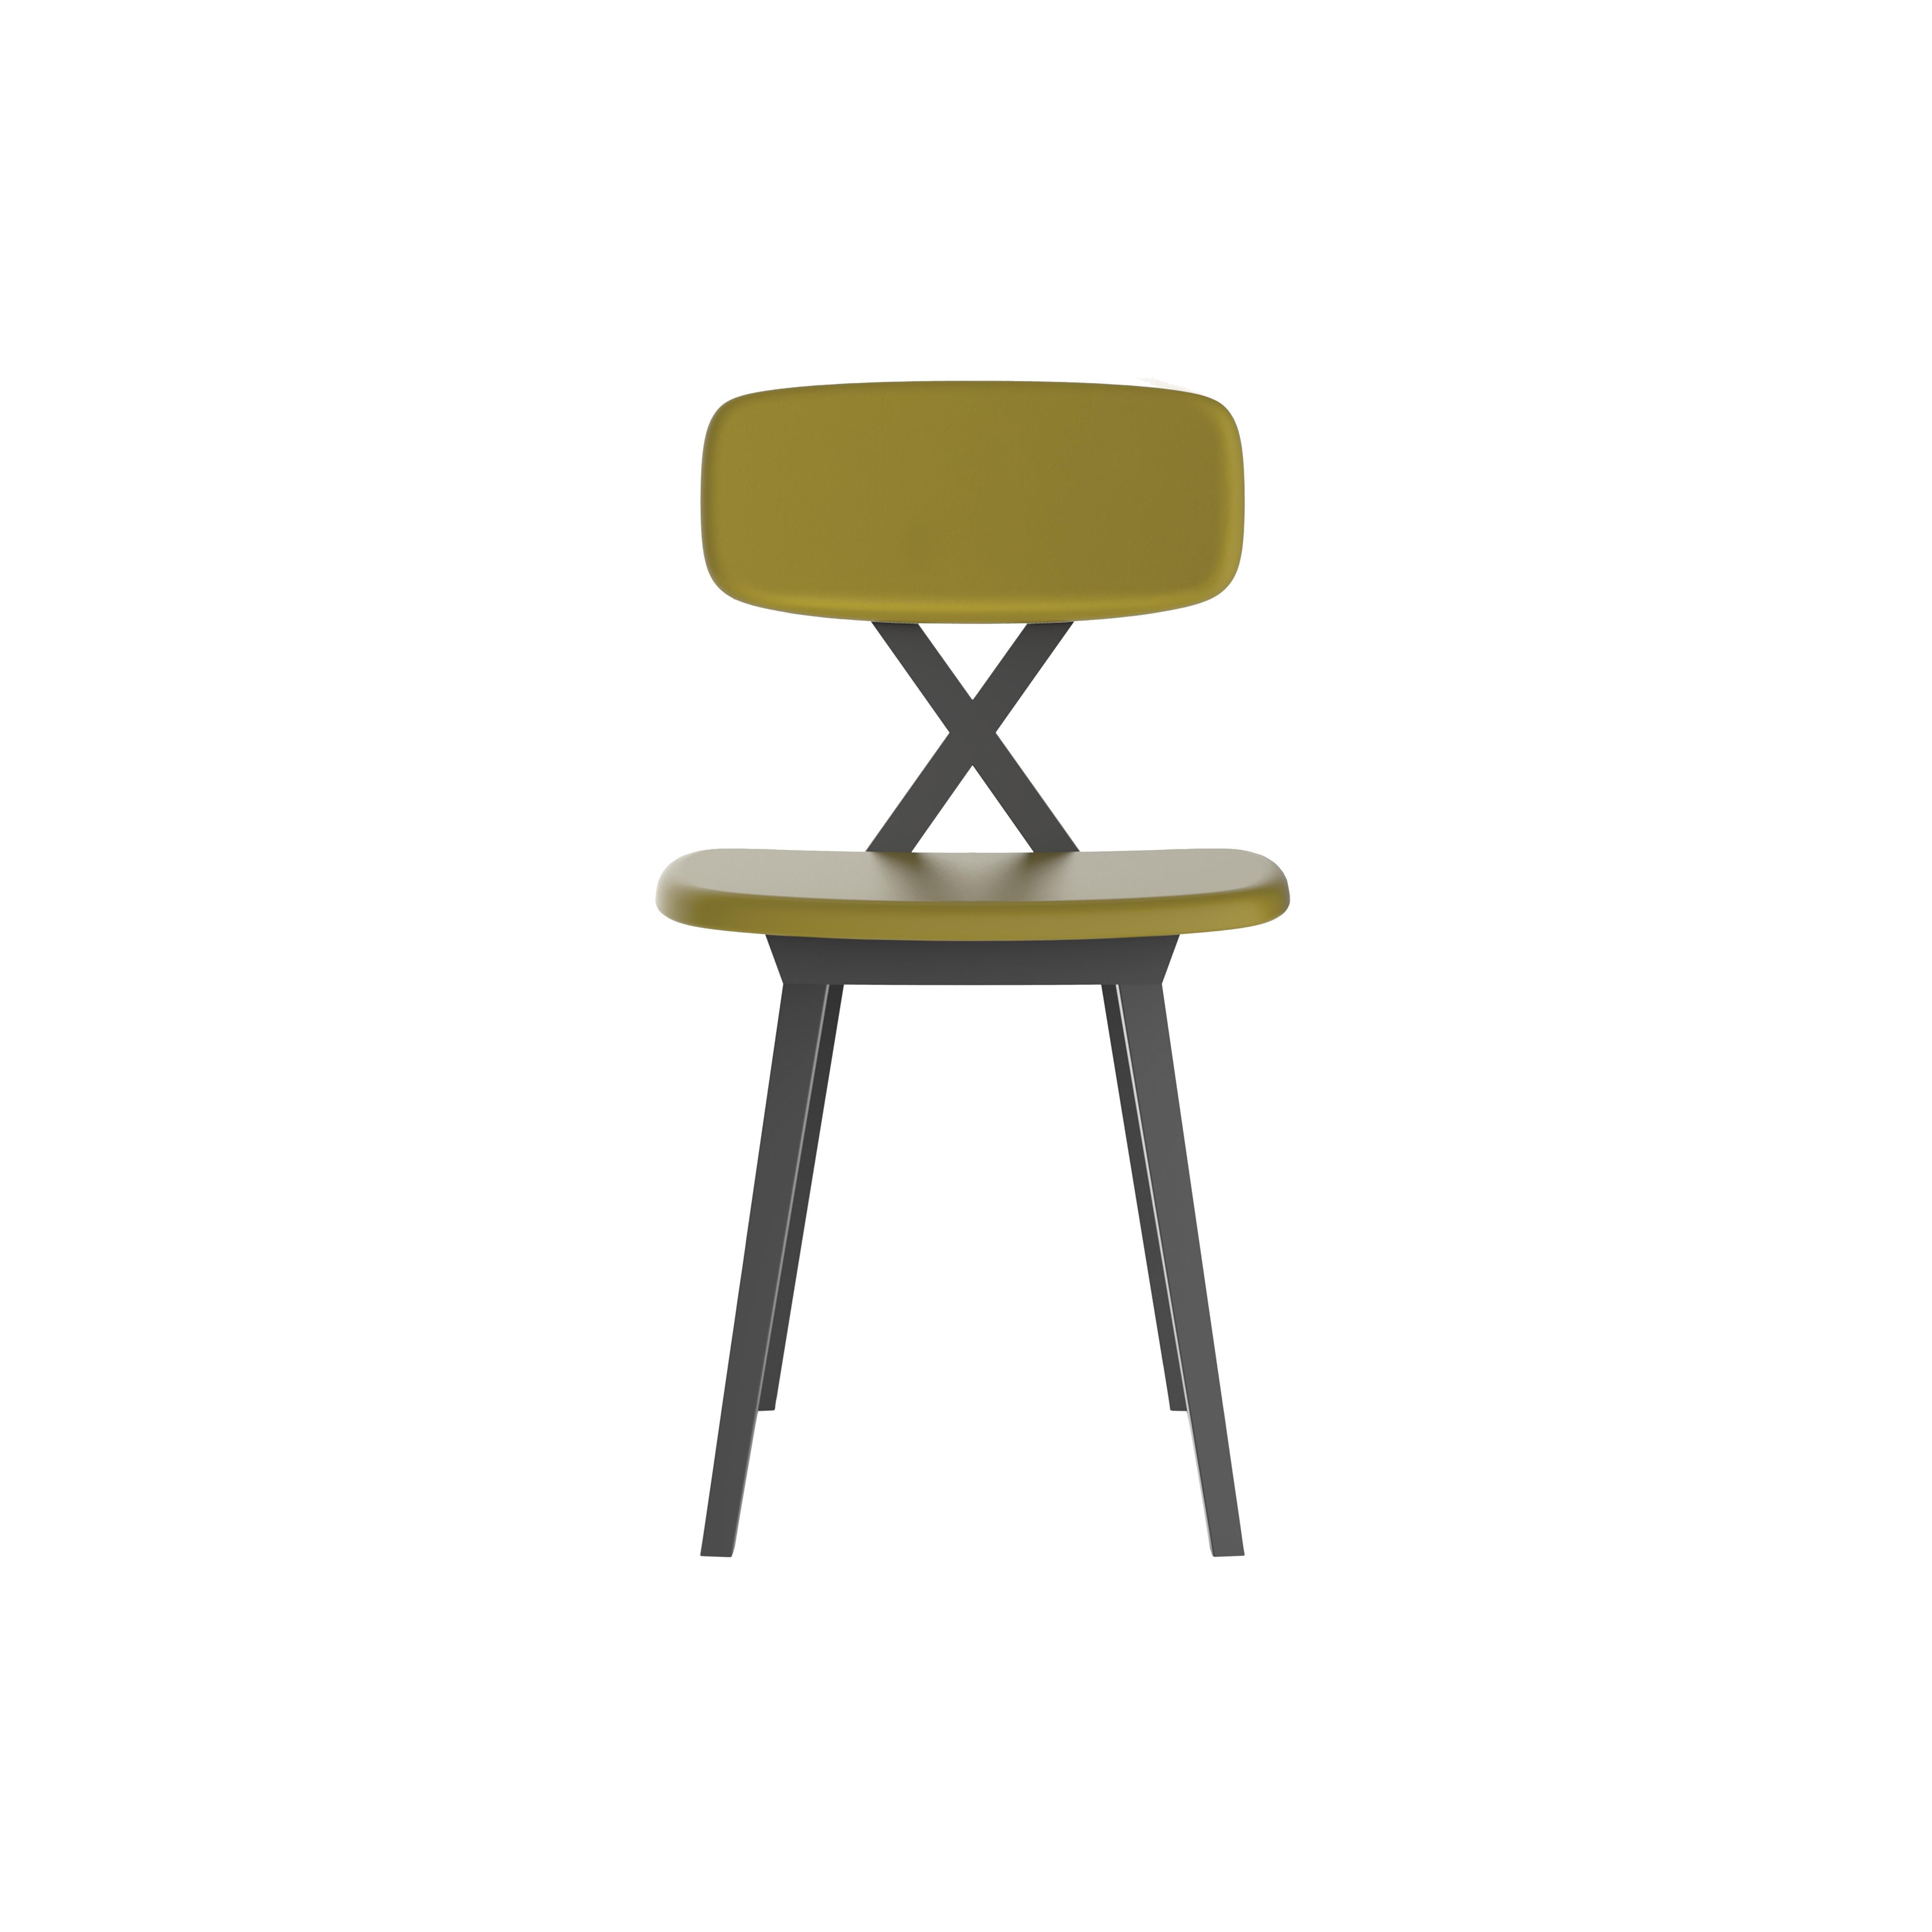 For Sale: Green (Green Mustard) Modern Lightweight Mustard Upholstered Dining Side Chair Set of 2